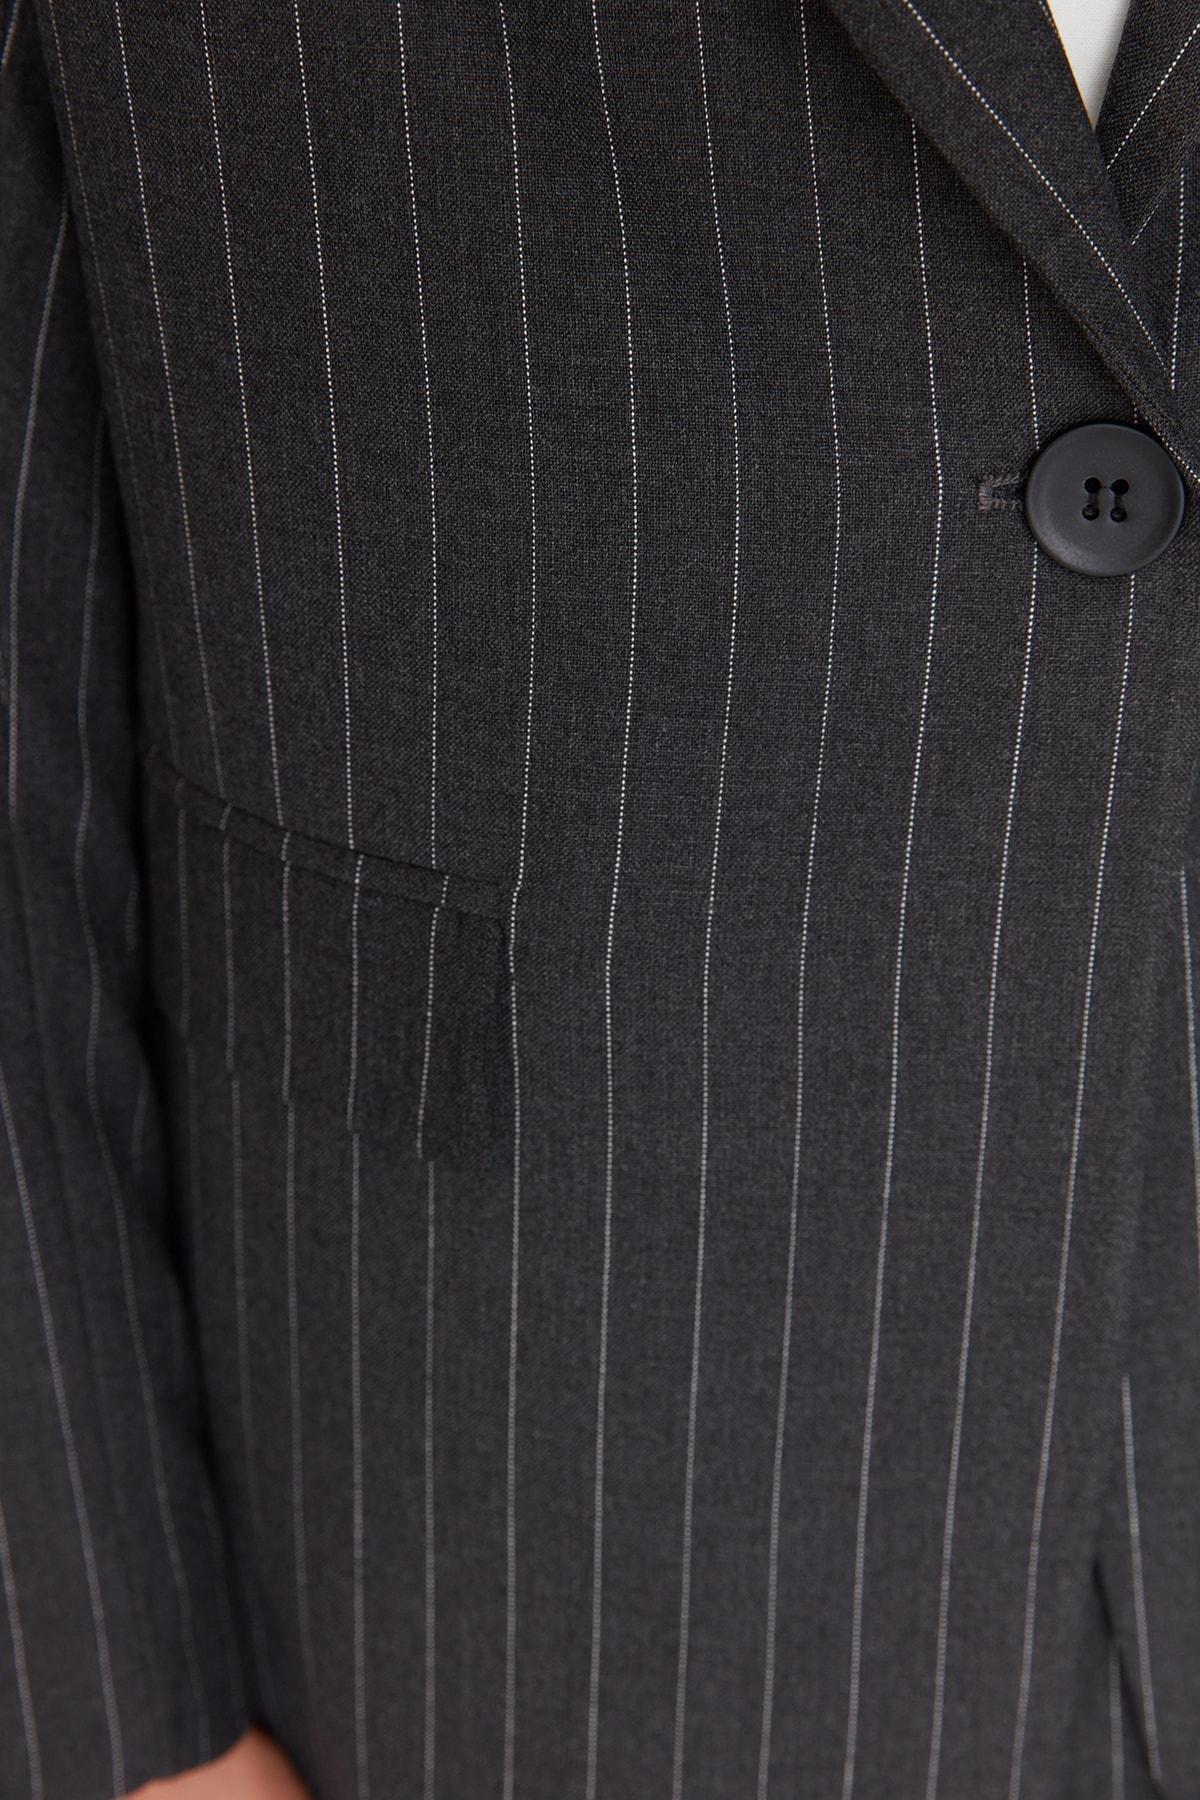 Trendyol - Black Striped Lapel Collar Blazer